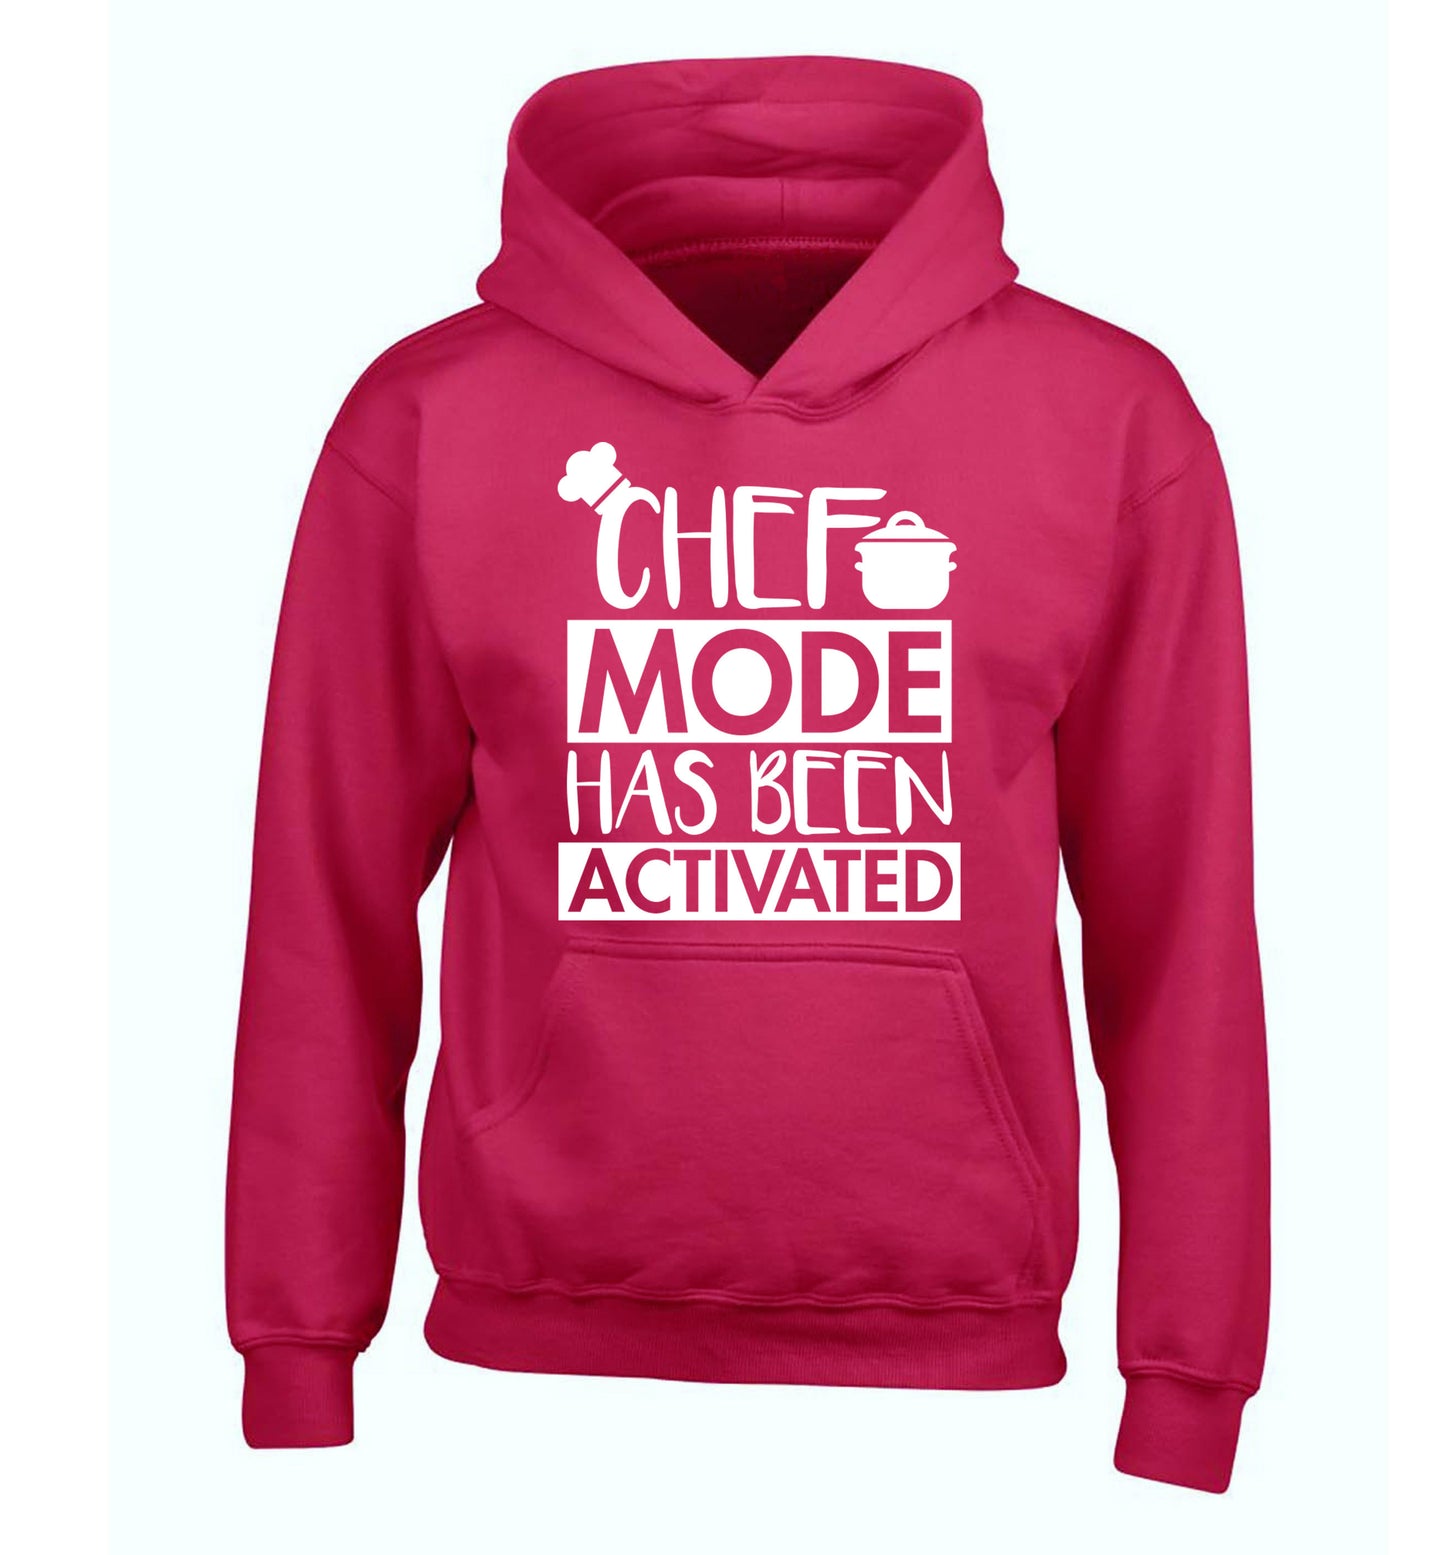 Chef mode has been activated children's pink hoodie 12-14 Years